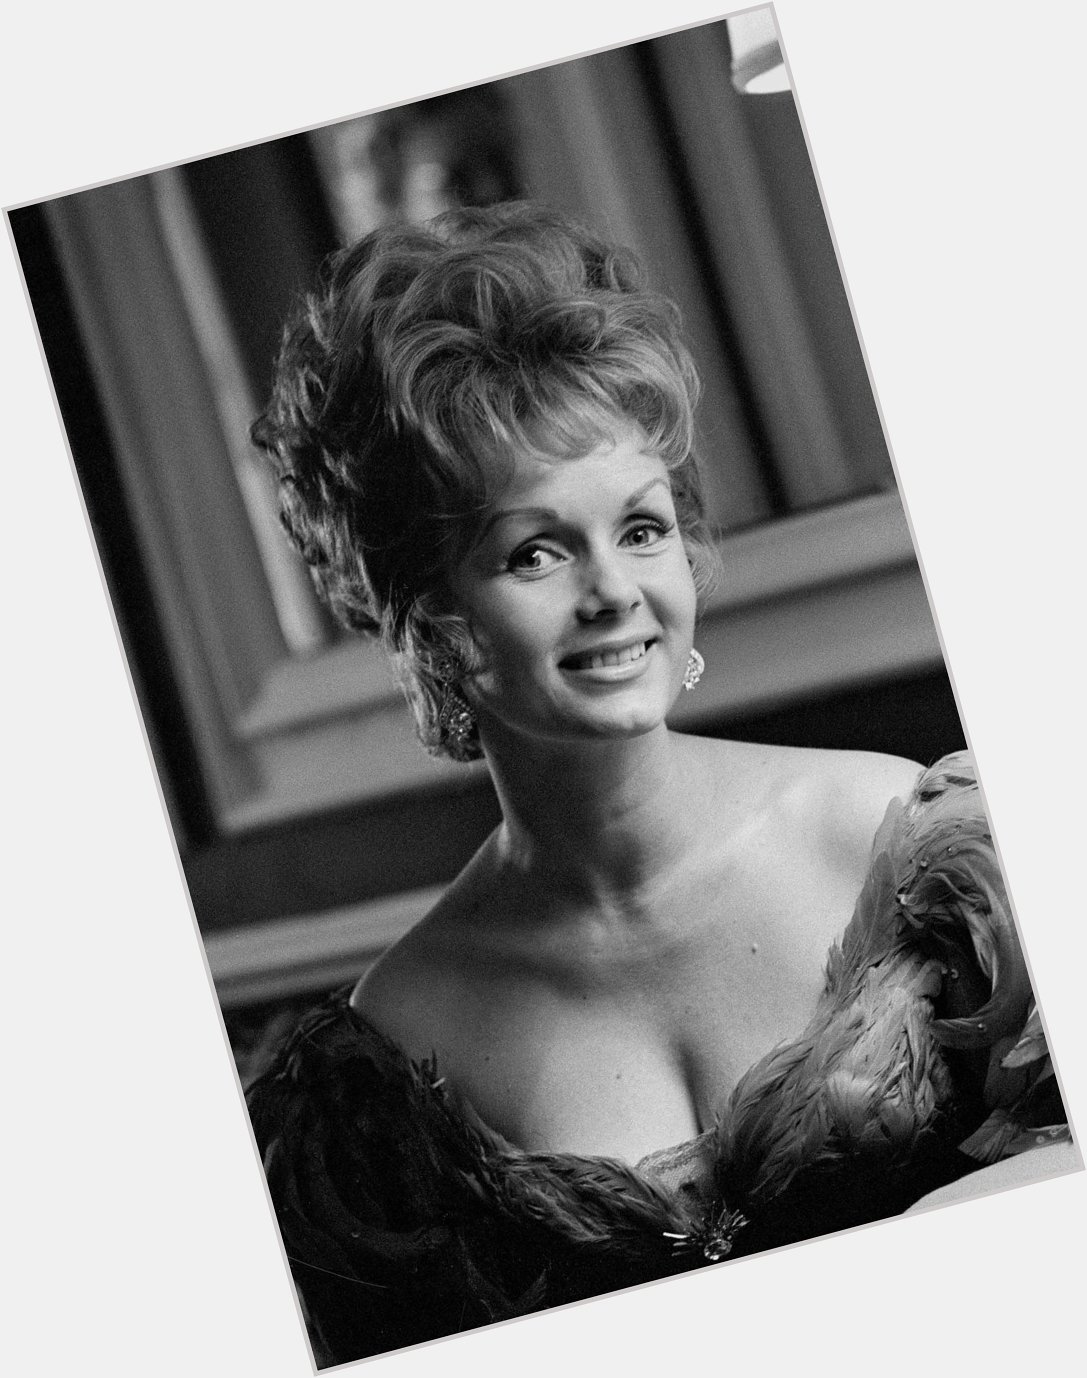 Happy birthday to the exquisite Miss Debbie Reynolds   